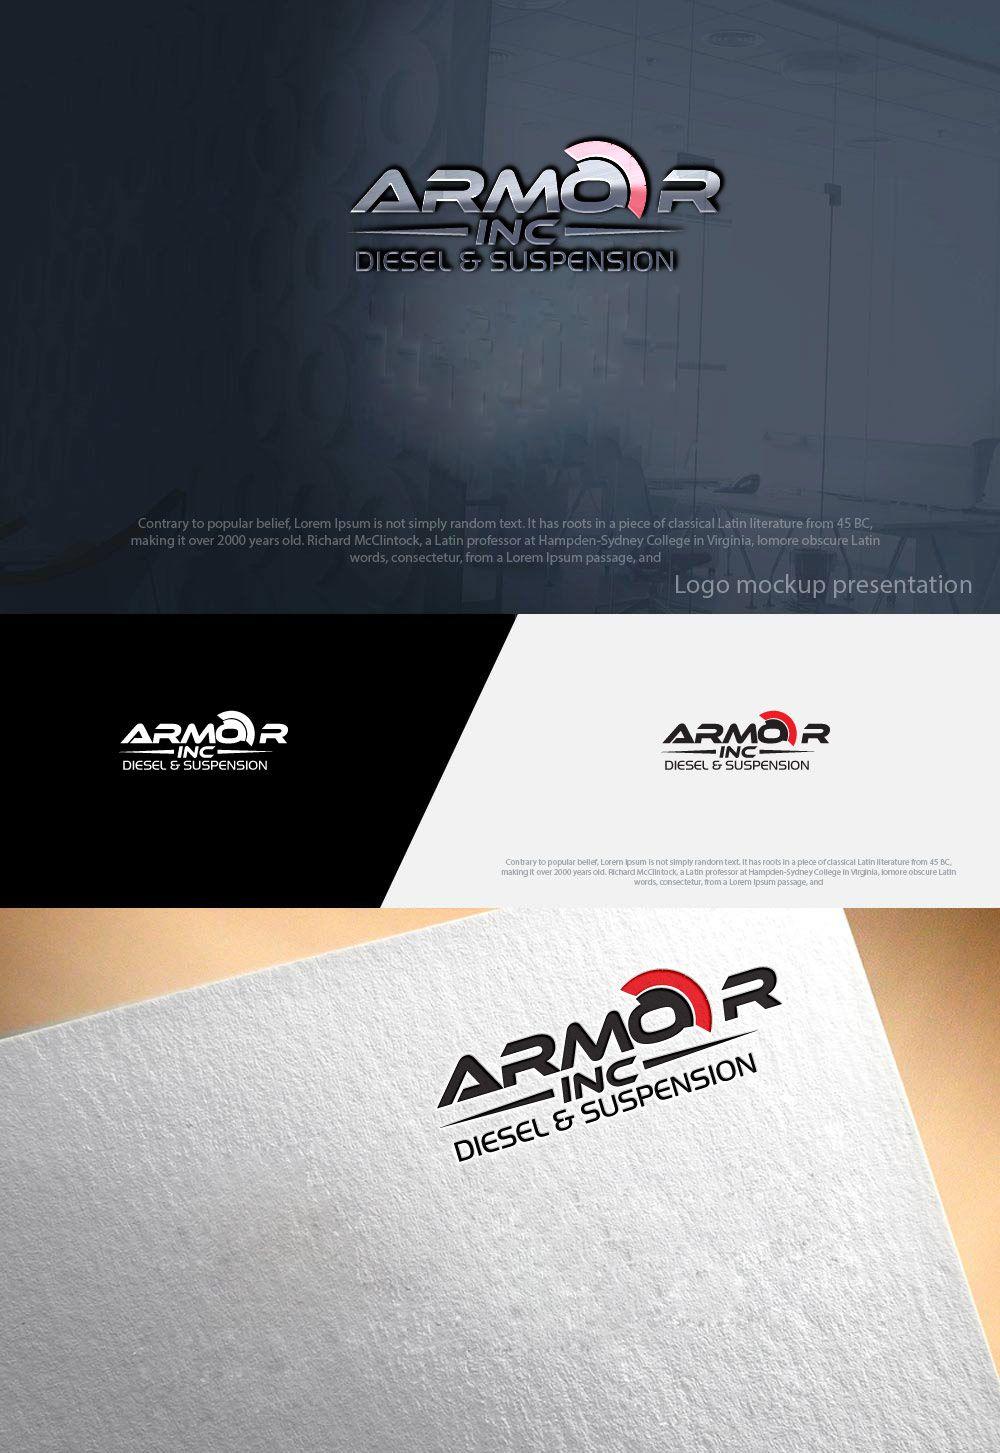 Armar Logo - Logo Design for ARMOR INC DIESEL & SUSPENSION by StarGraphic ...